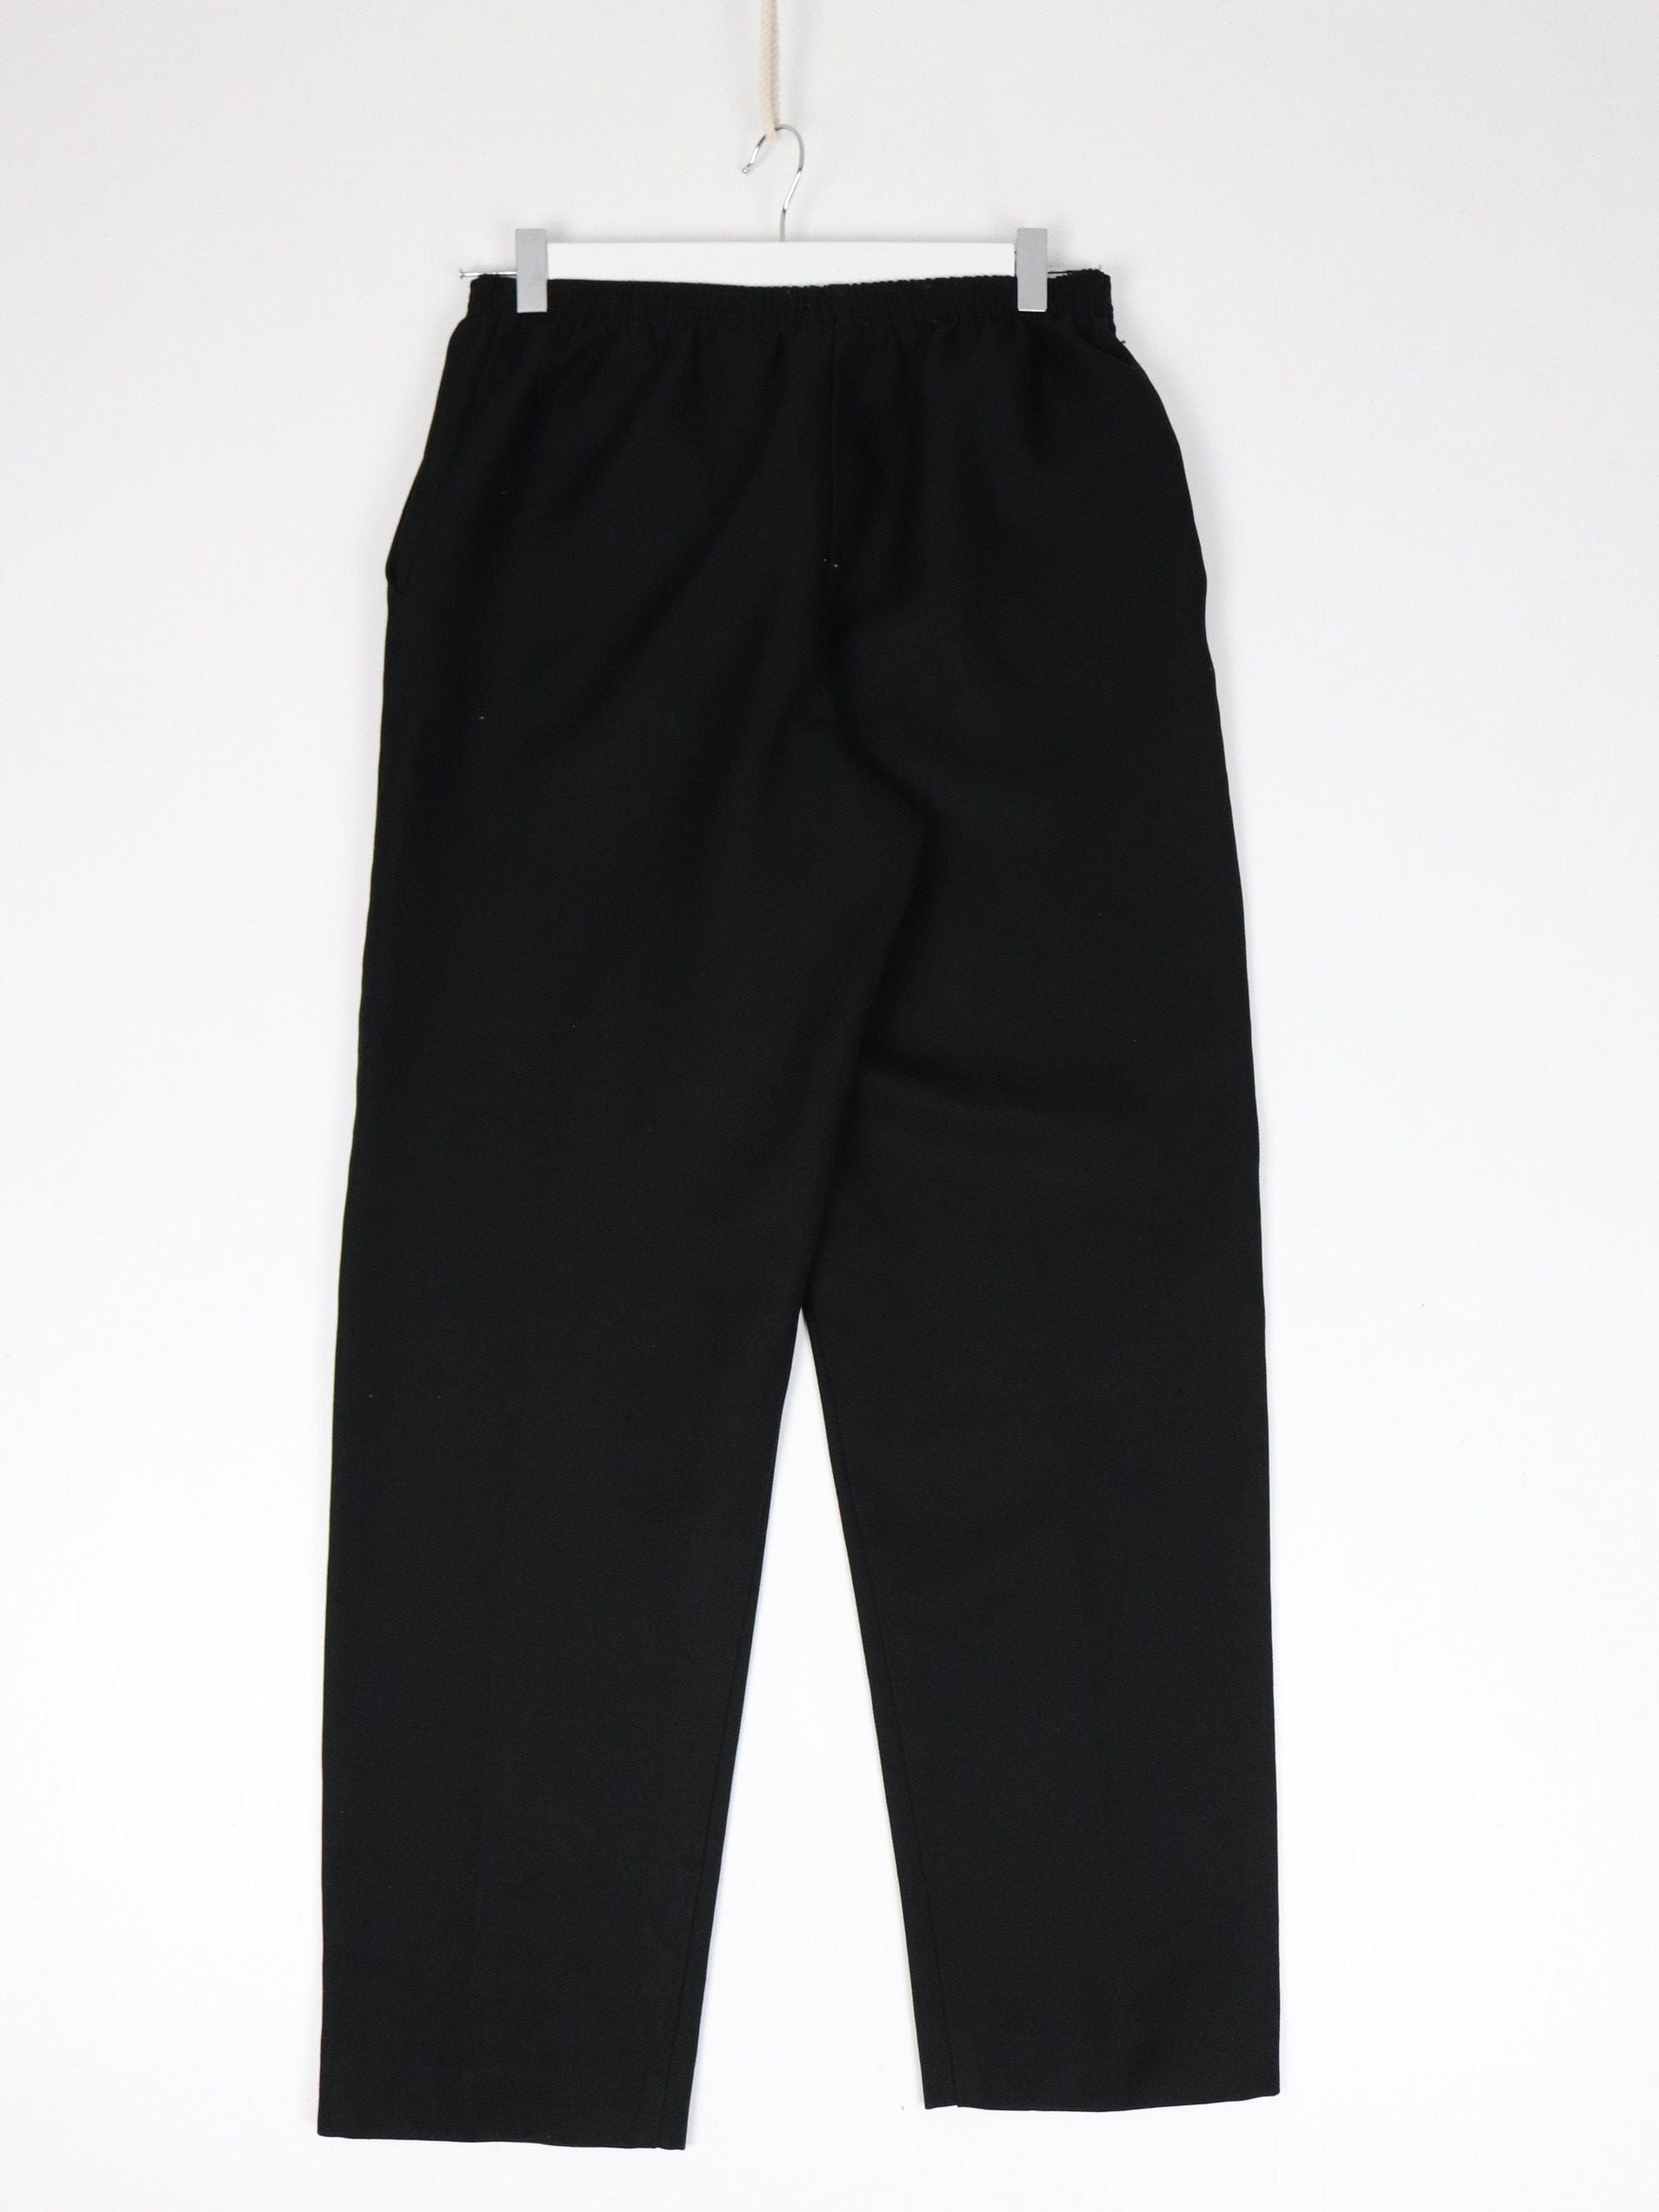 Alfred Dunner Womens Petite Solid Medium Pant, Denim, 6P at  Women's  Clothing store